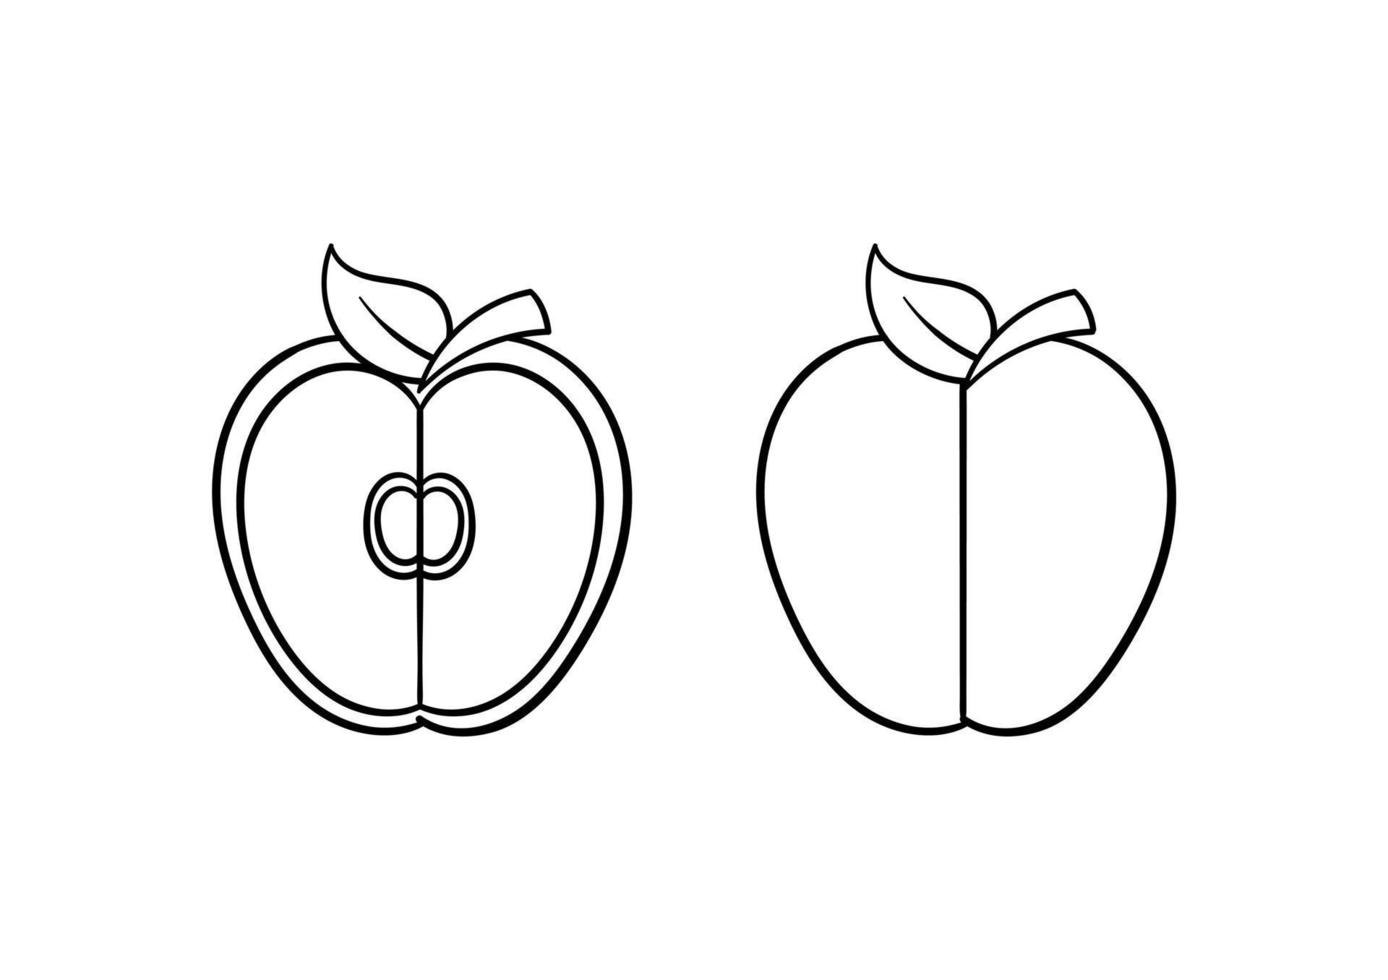 hand drawn illustration of an apple vector